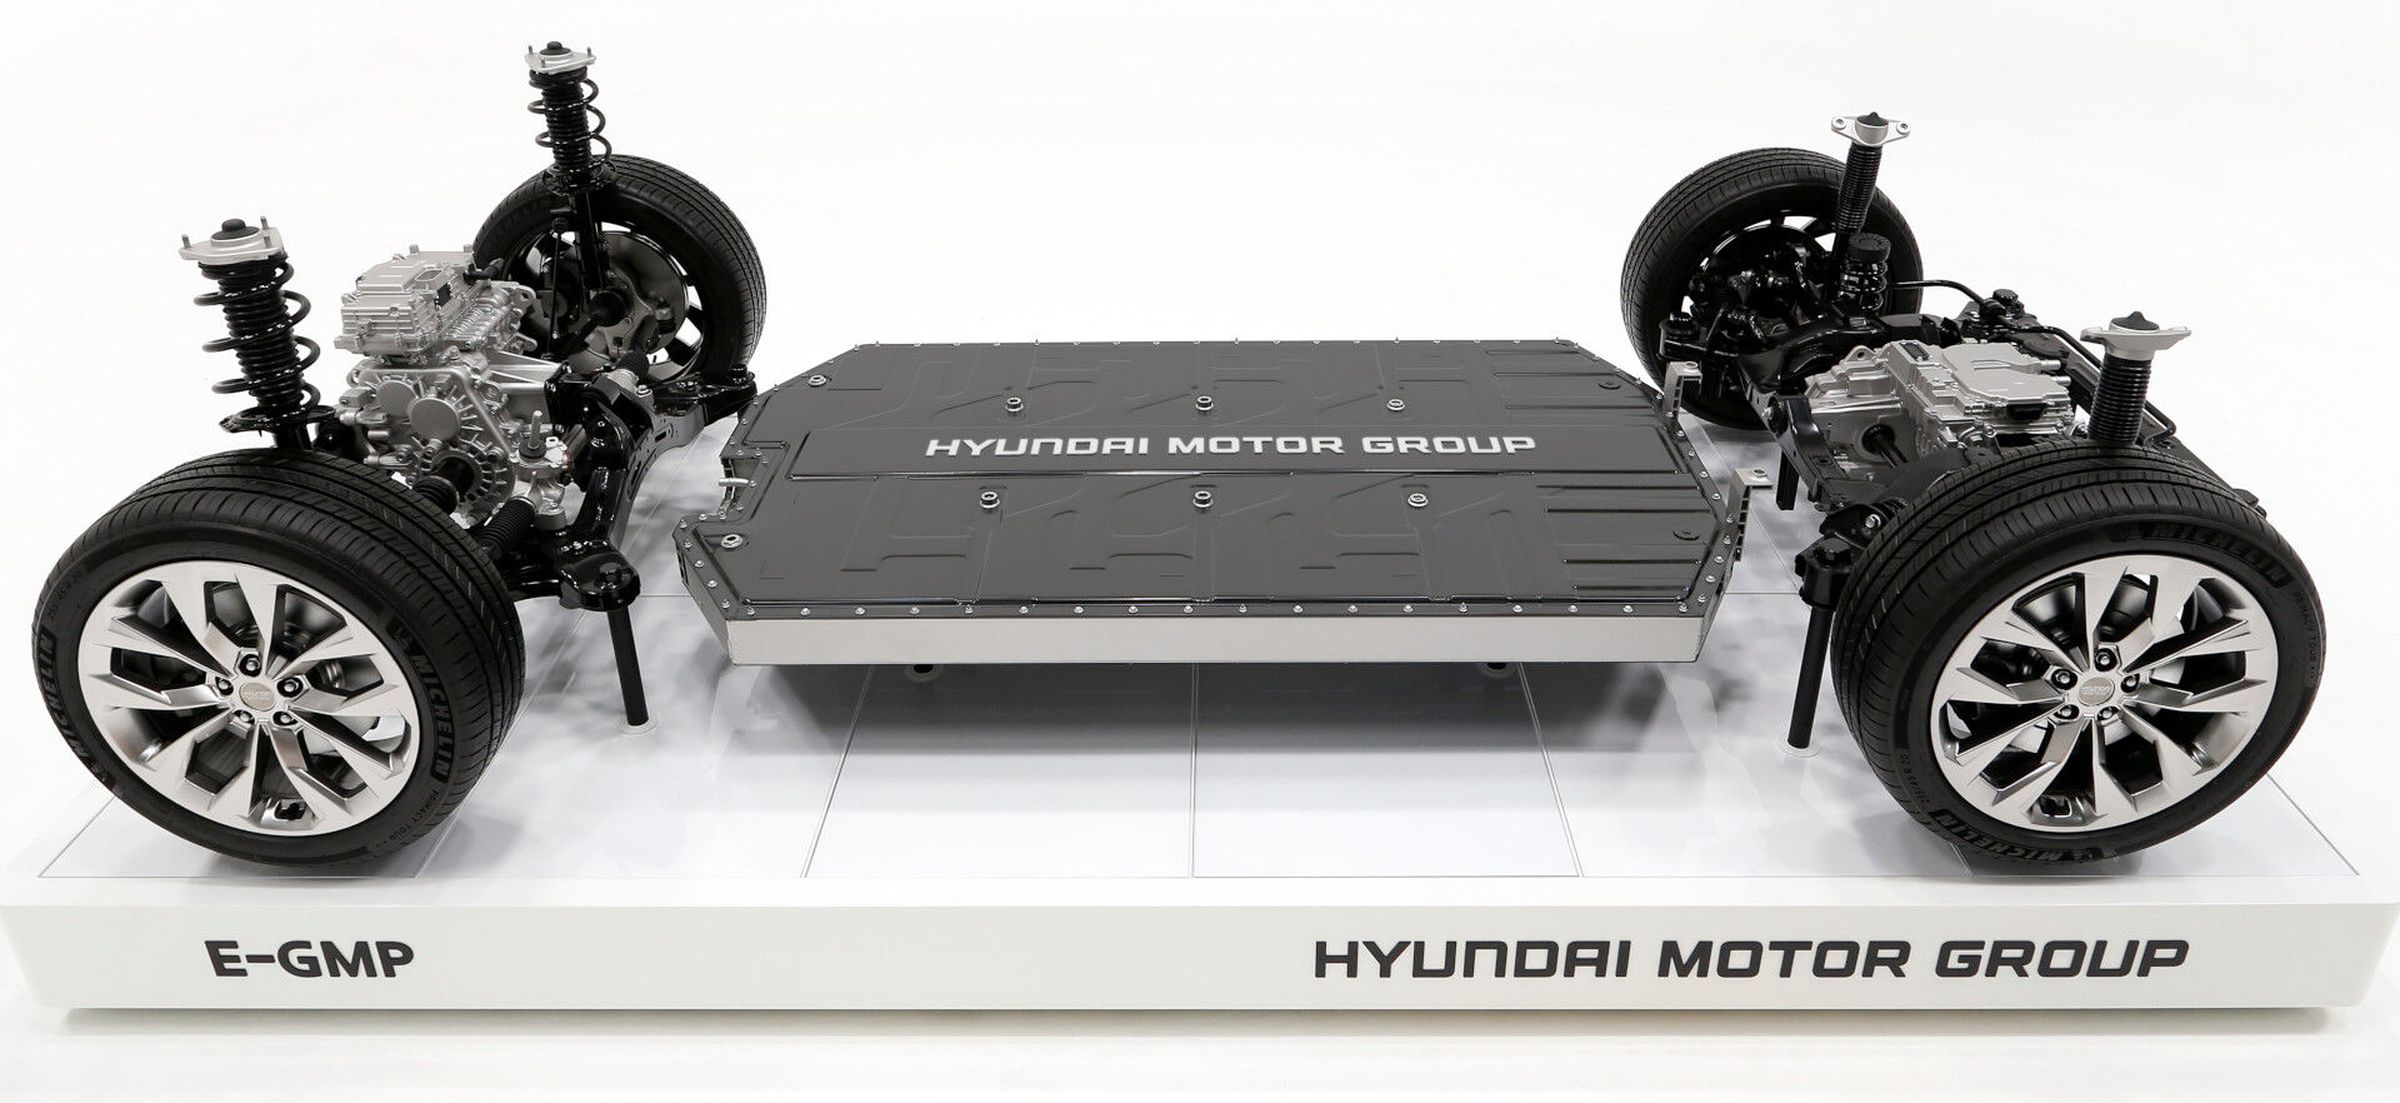 Hyundai’s E-GMP electric vehicle platform.